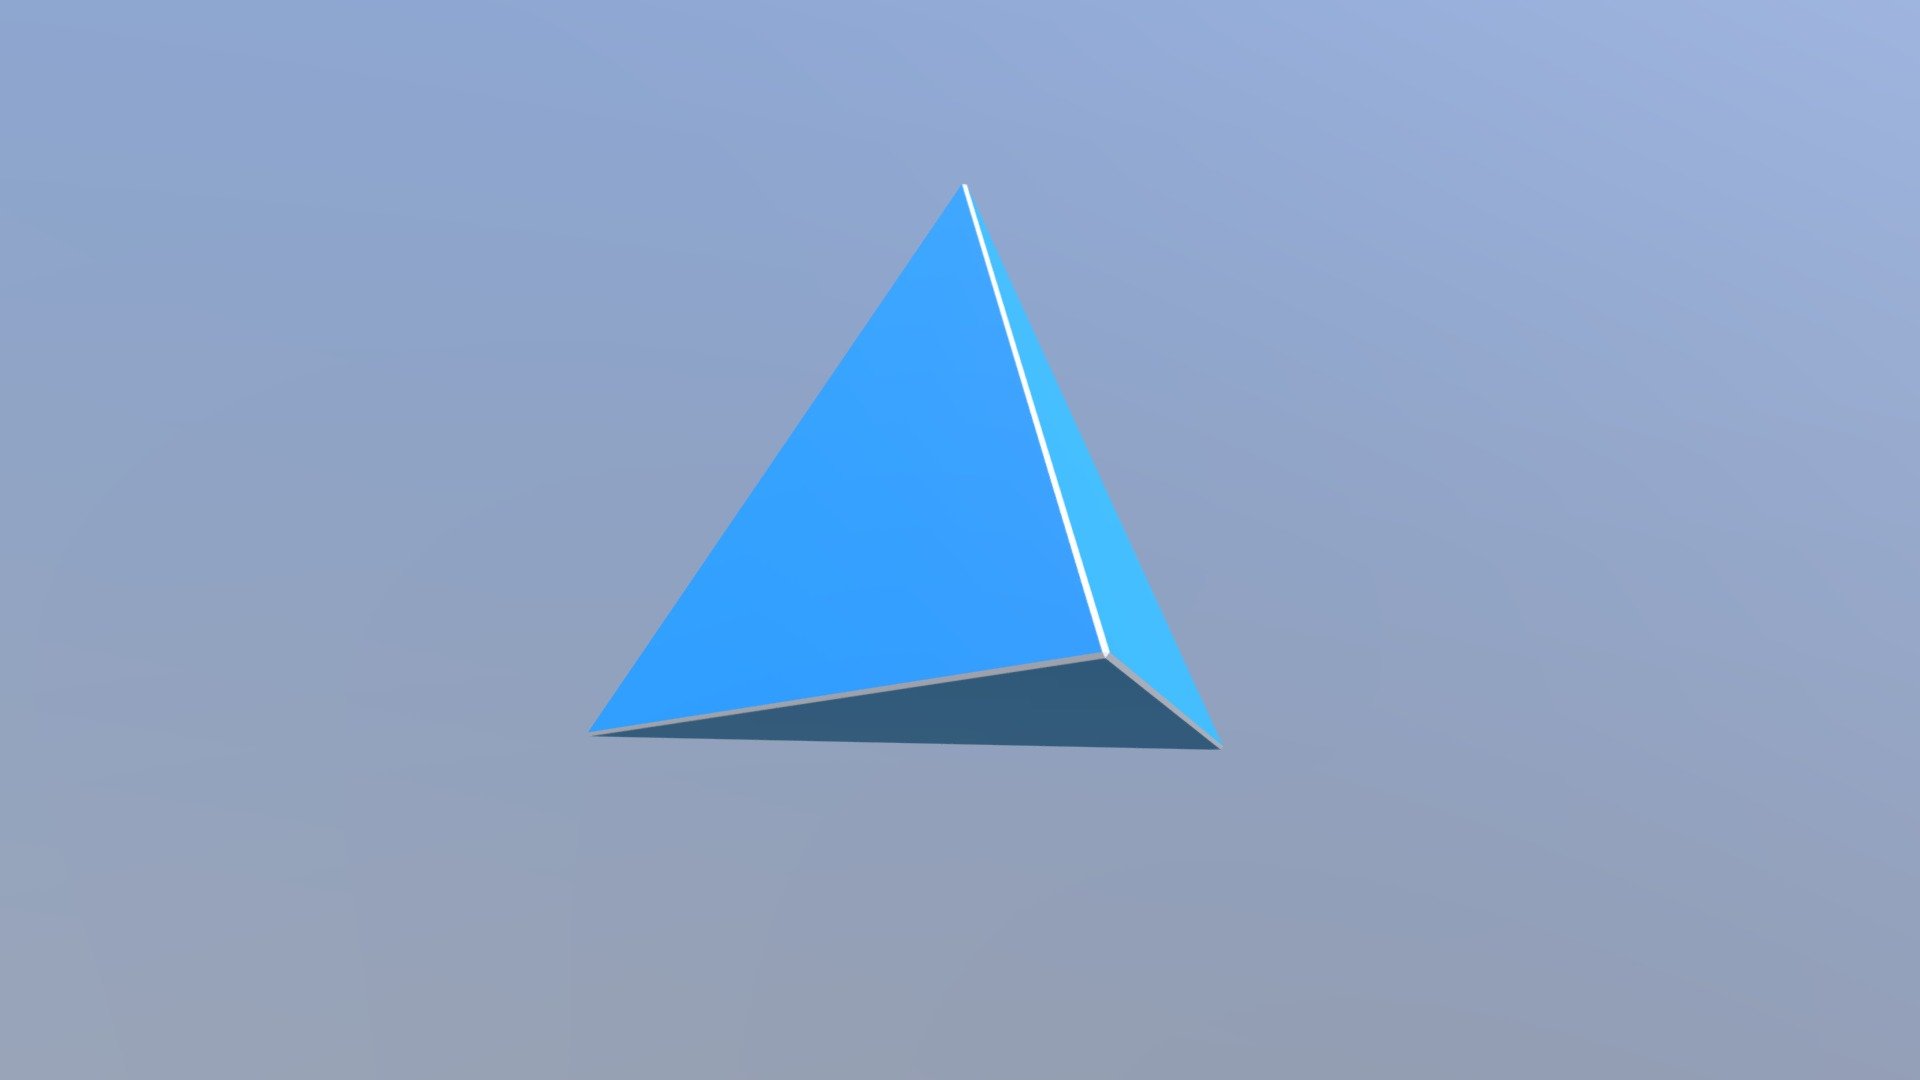 Regular Triangular Based Pyramid - 3D model by capturegroup